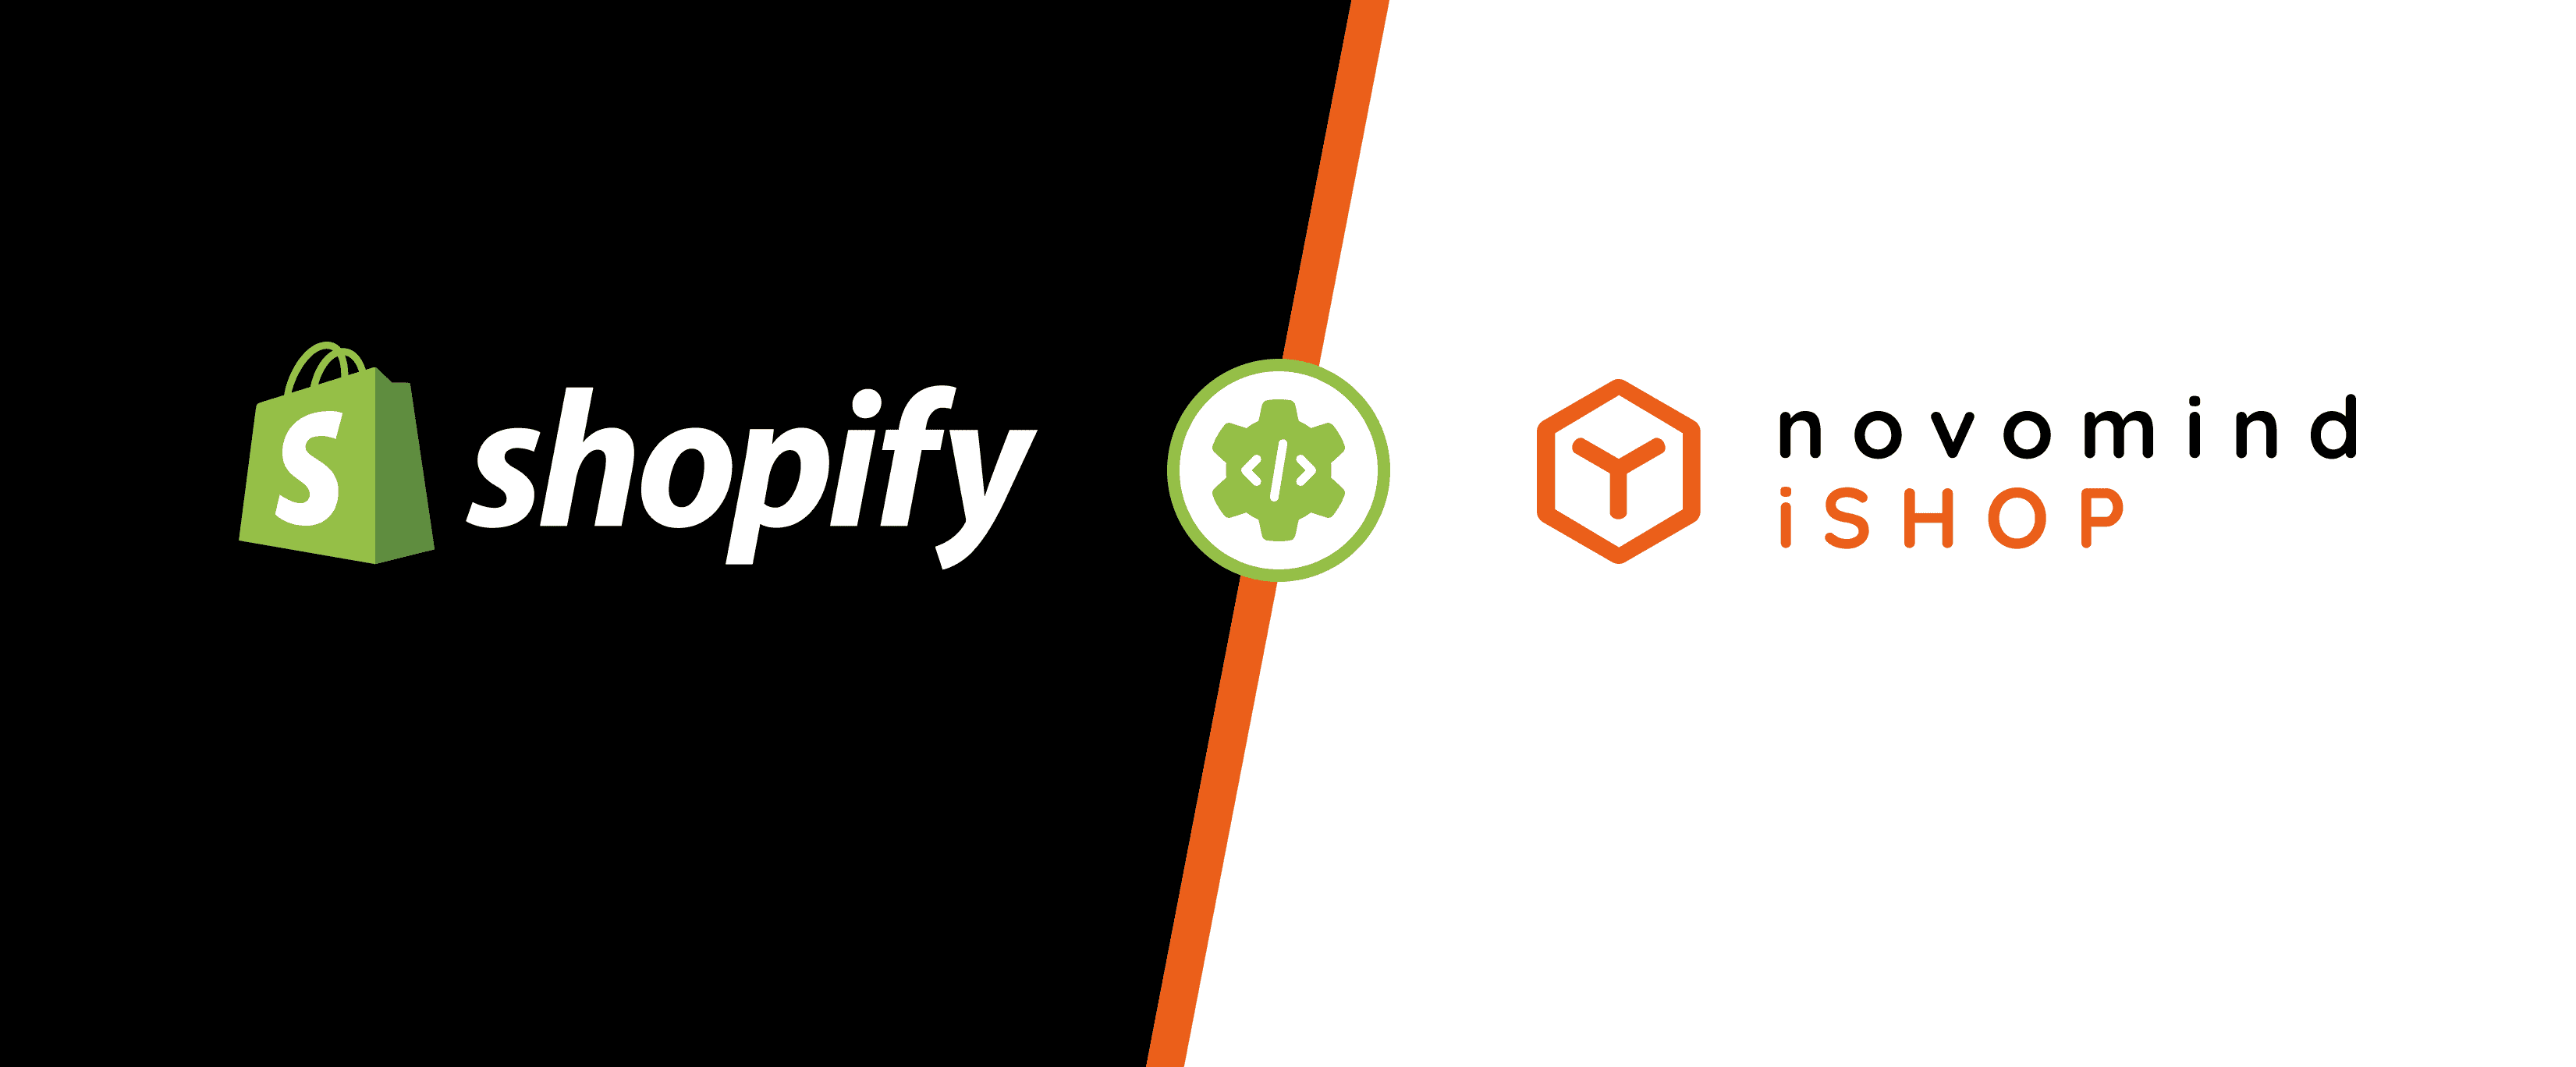 novomind iShop zu Shopify Migration